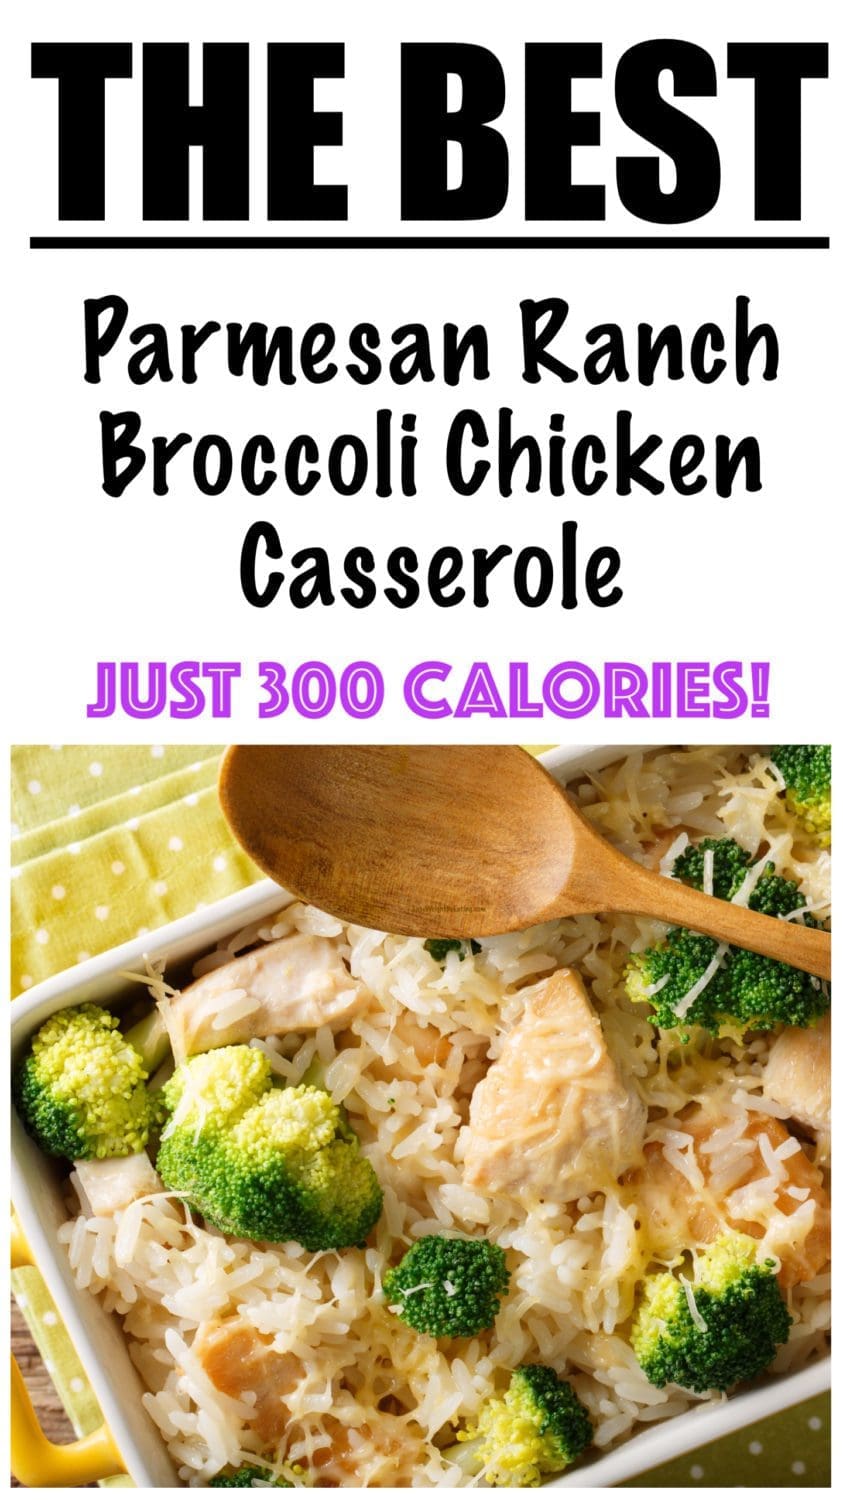 Parmesan Ranch Broccoli Chicken Casserole
